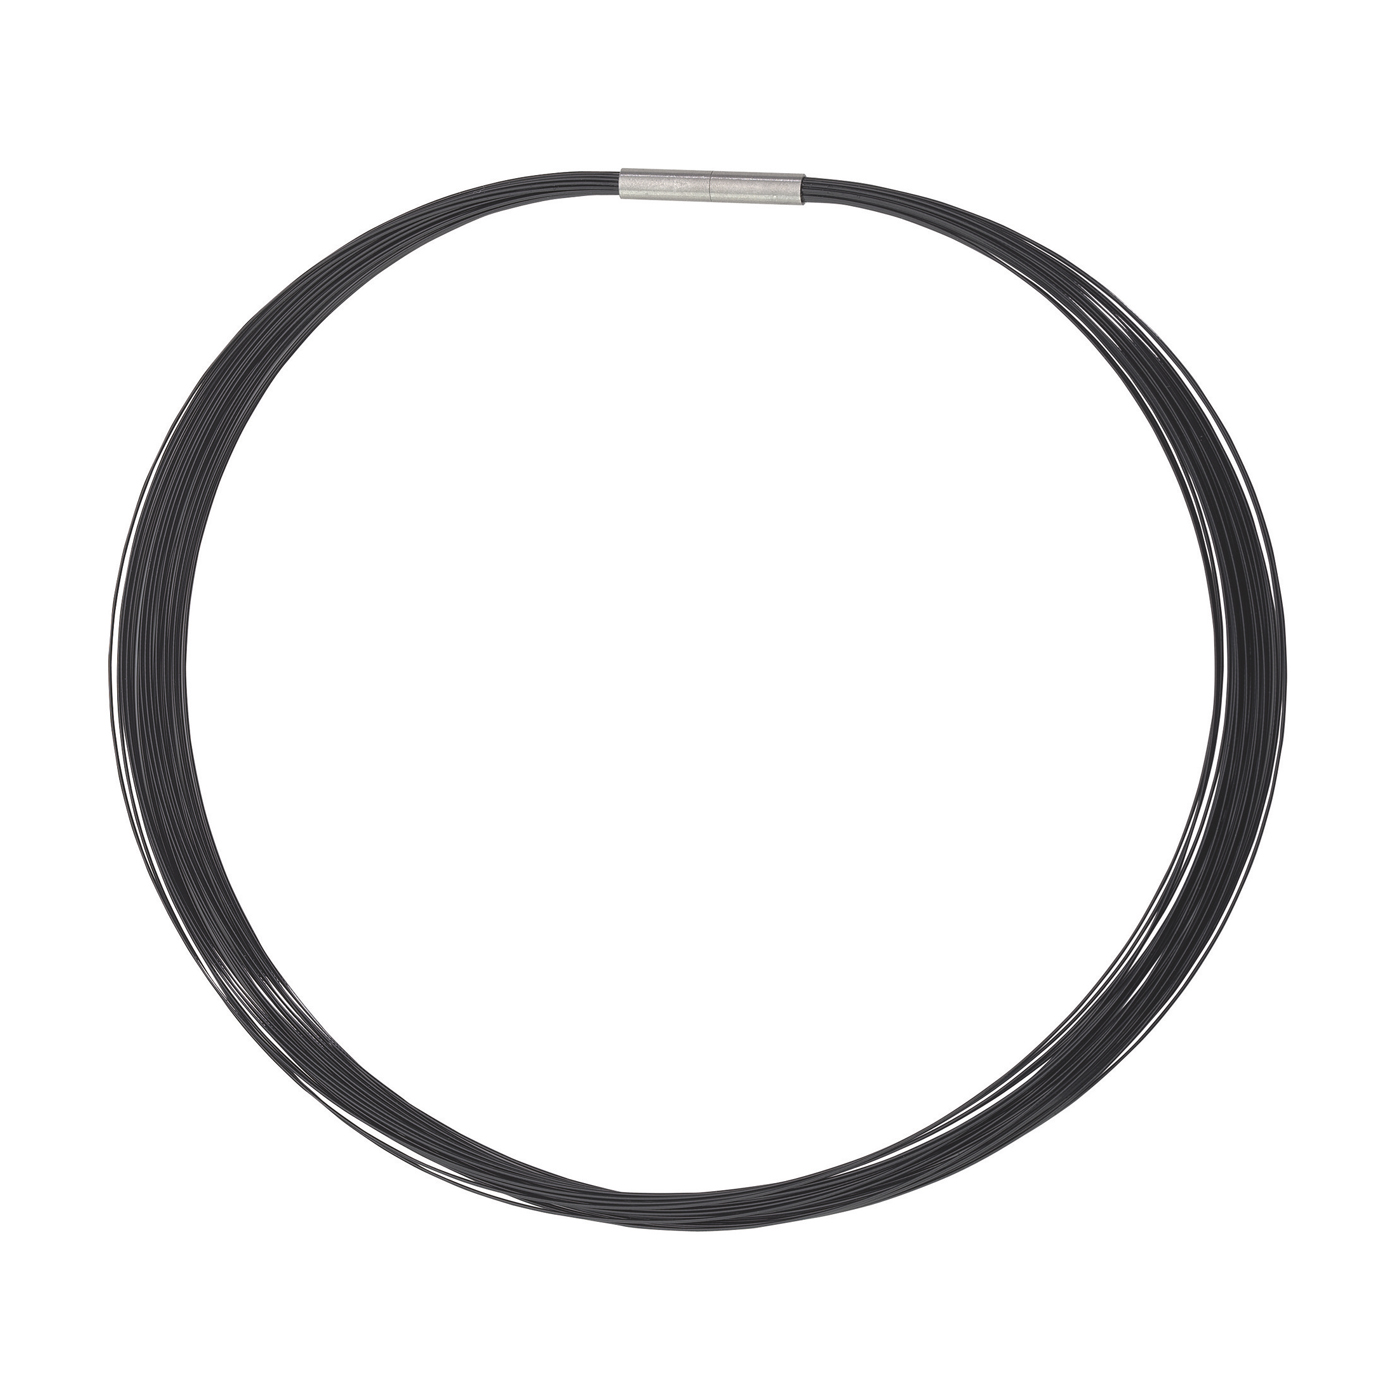 Steel Cable Neck Wire, Black, 24-Strand, 42 cm - 1 piece